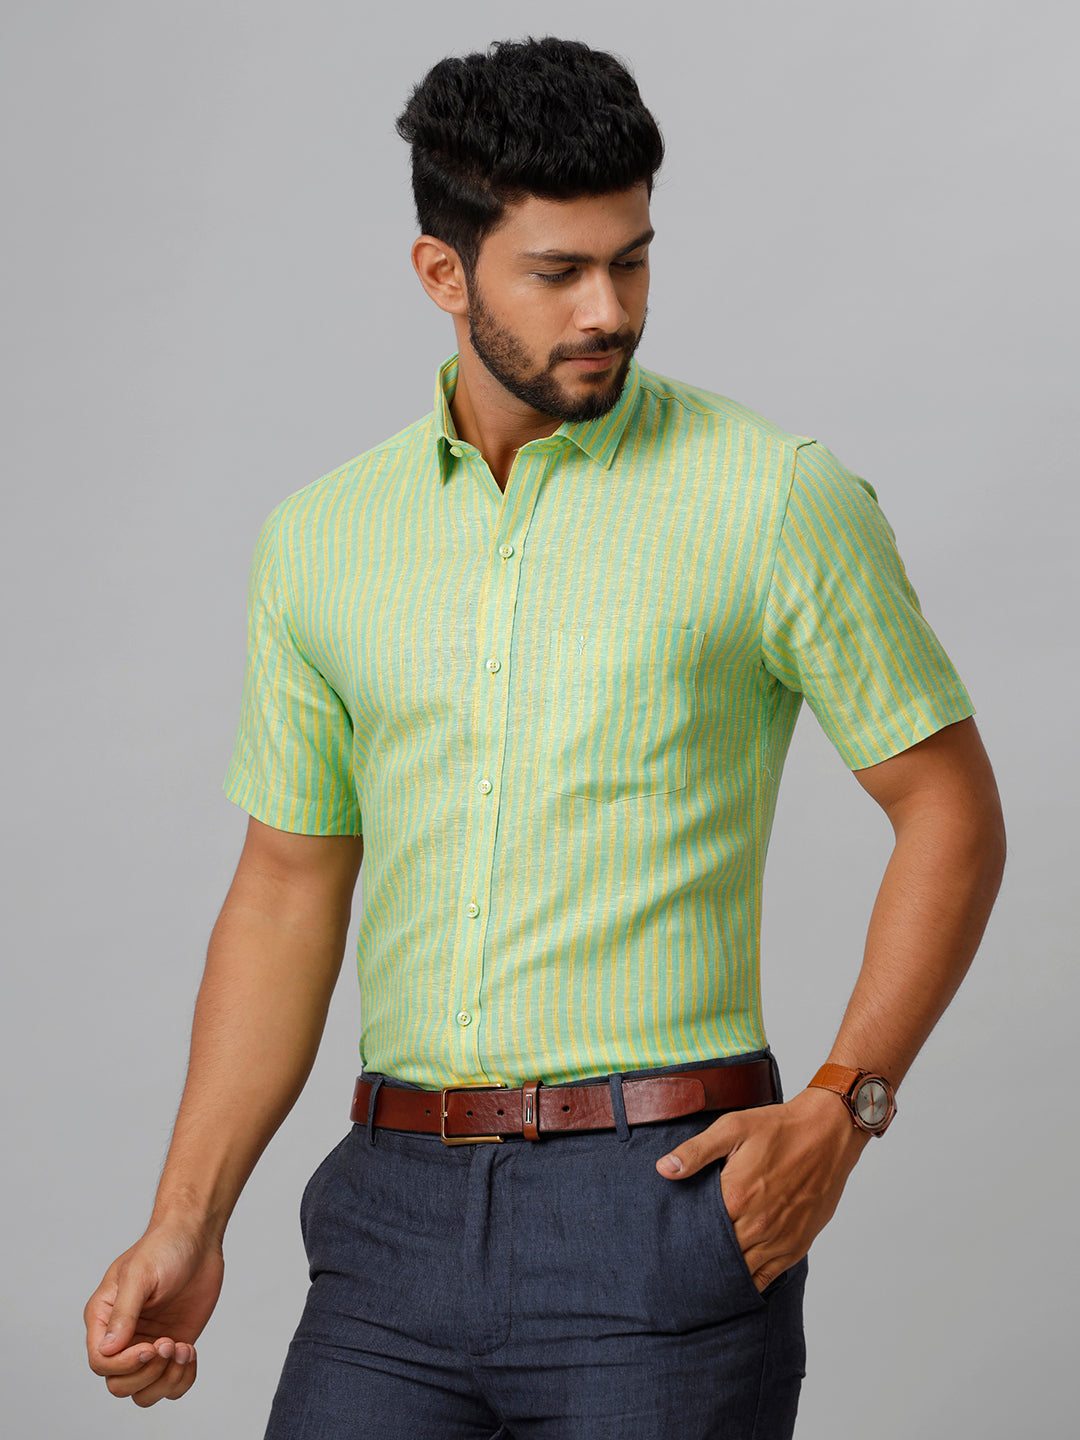 Men's Button Down Shirts | lululemon